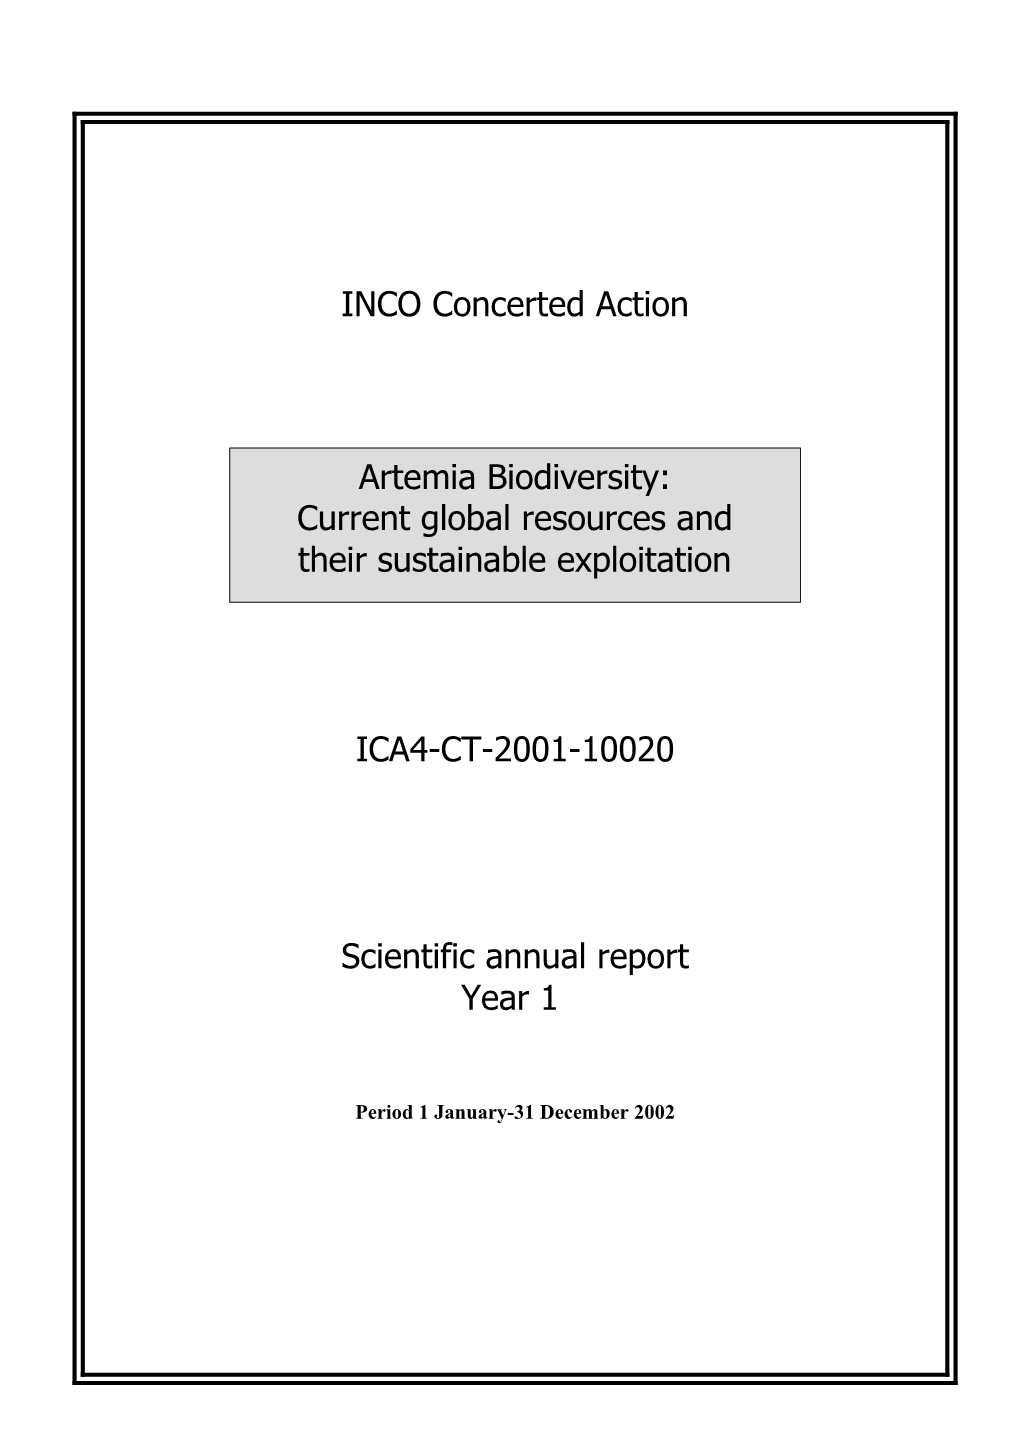 Scientific Annual Report